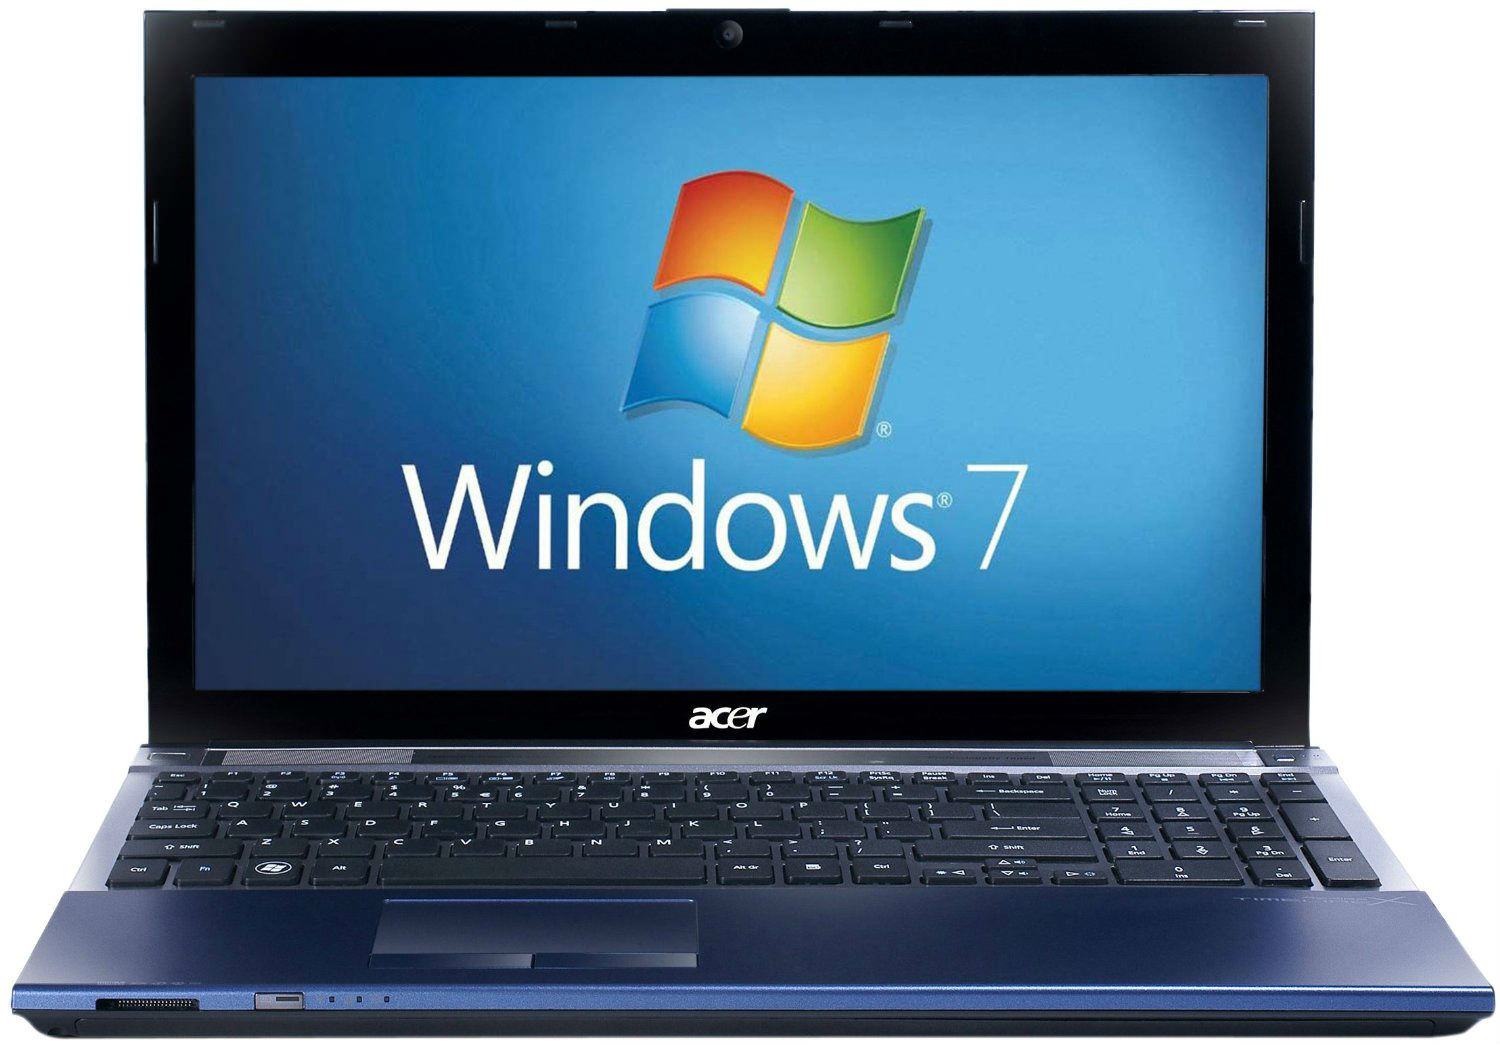 Acer Aspire Timeline X 5830T Laptop (Core i3 2nd Gen/2 GB/500 GB/Windows 7/128 MB) Price